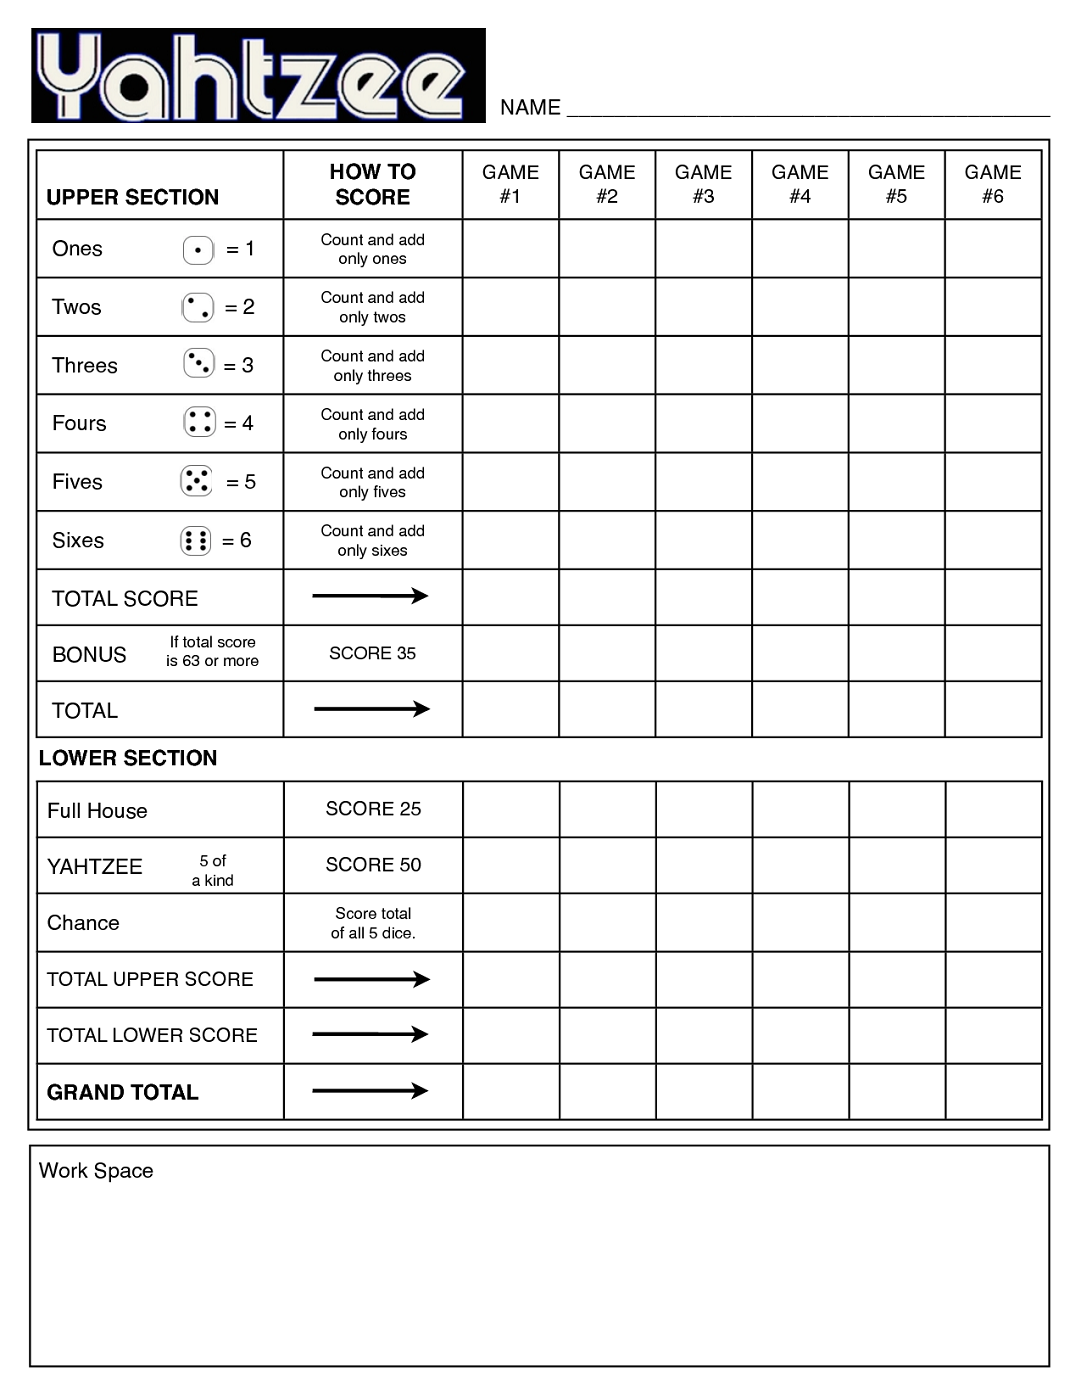 yahtzee-score-sheet-printable-free-customize-and-print